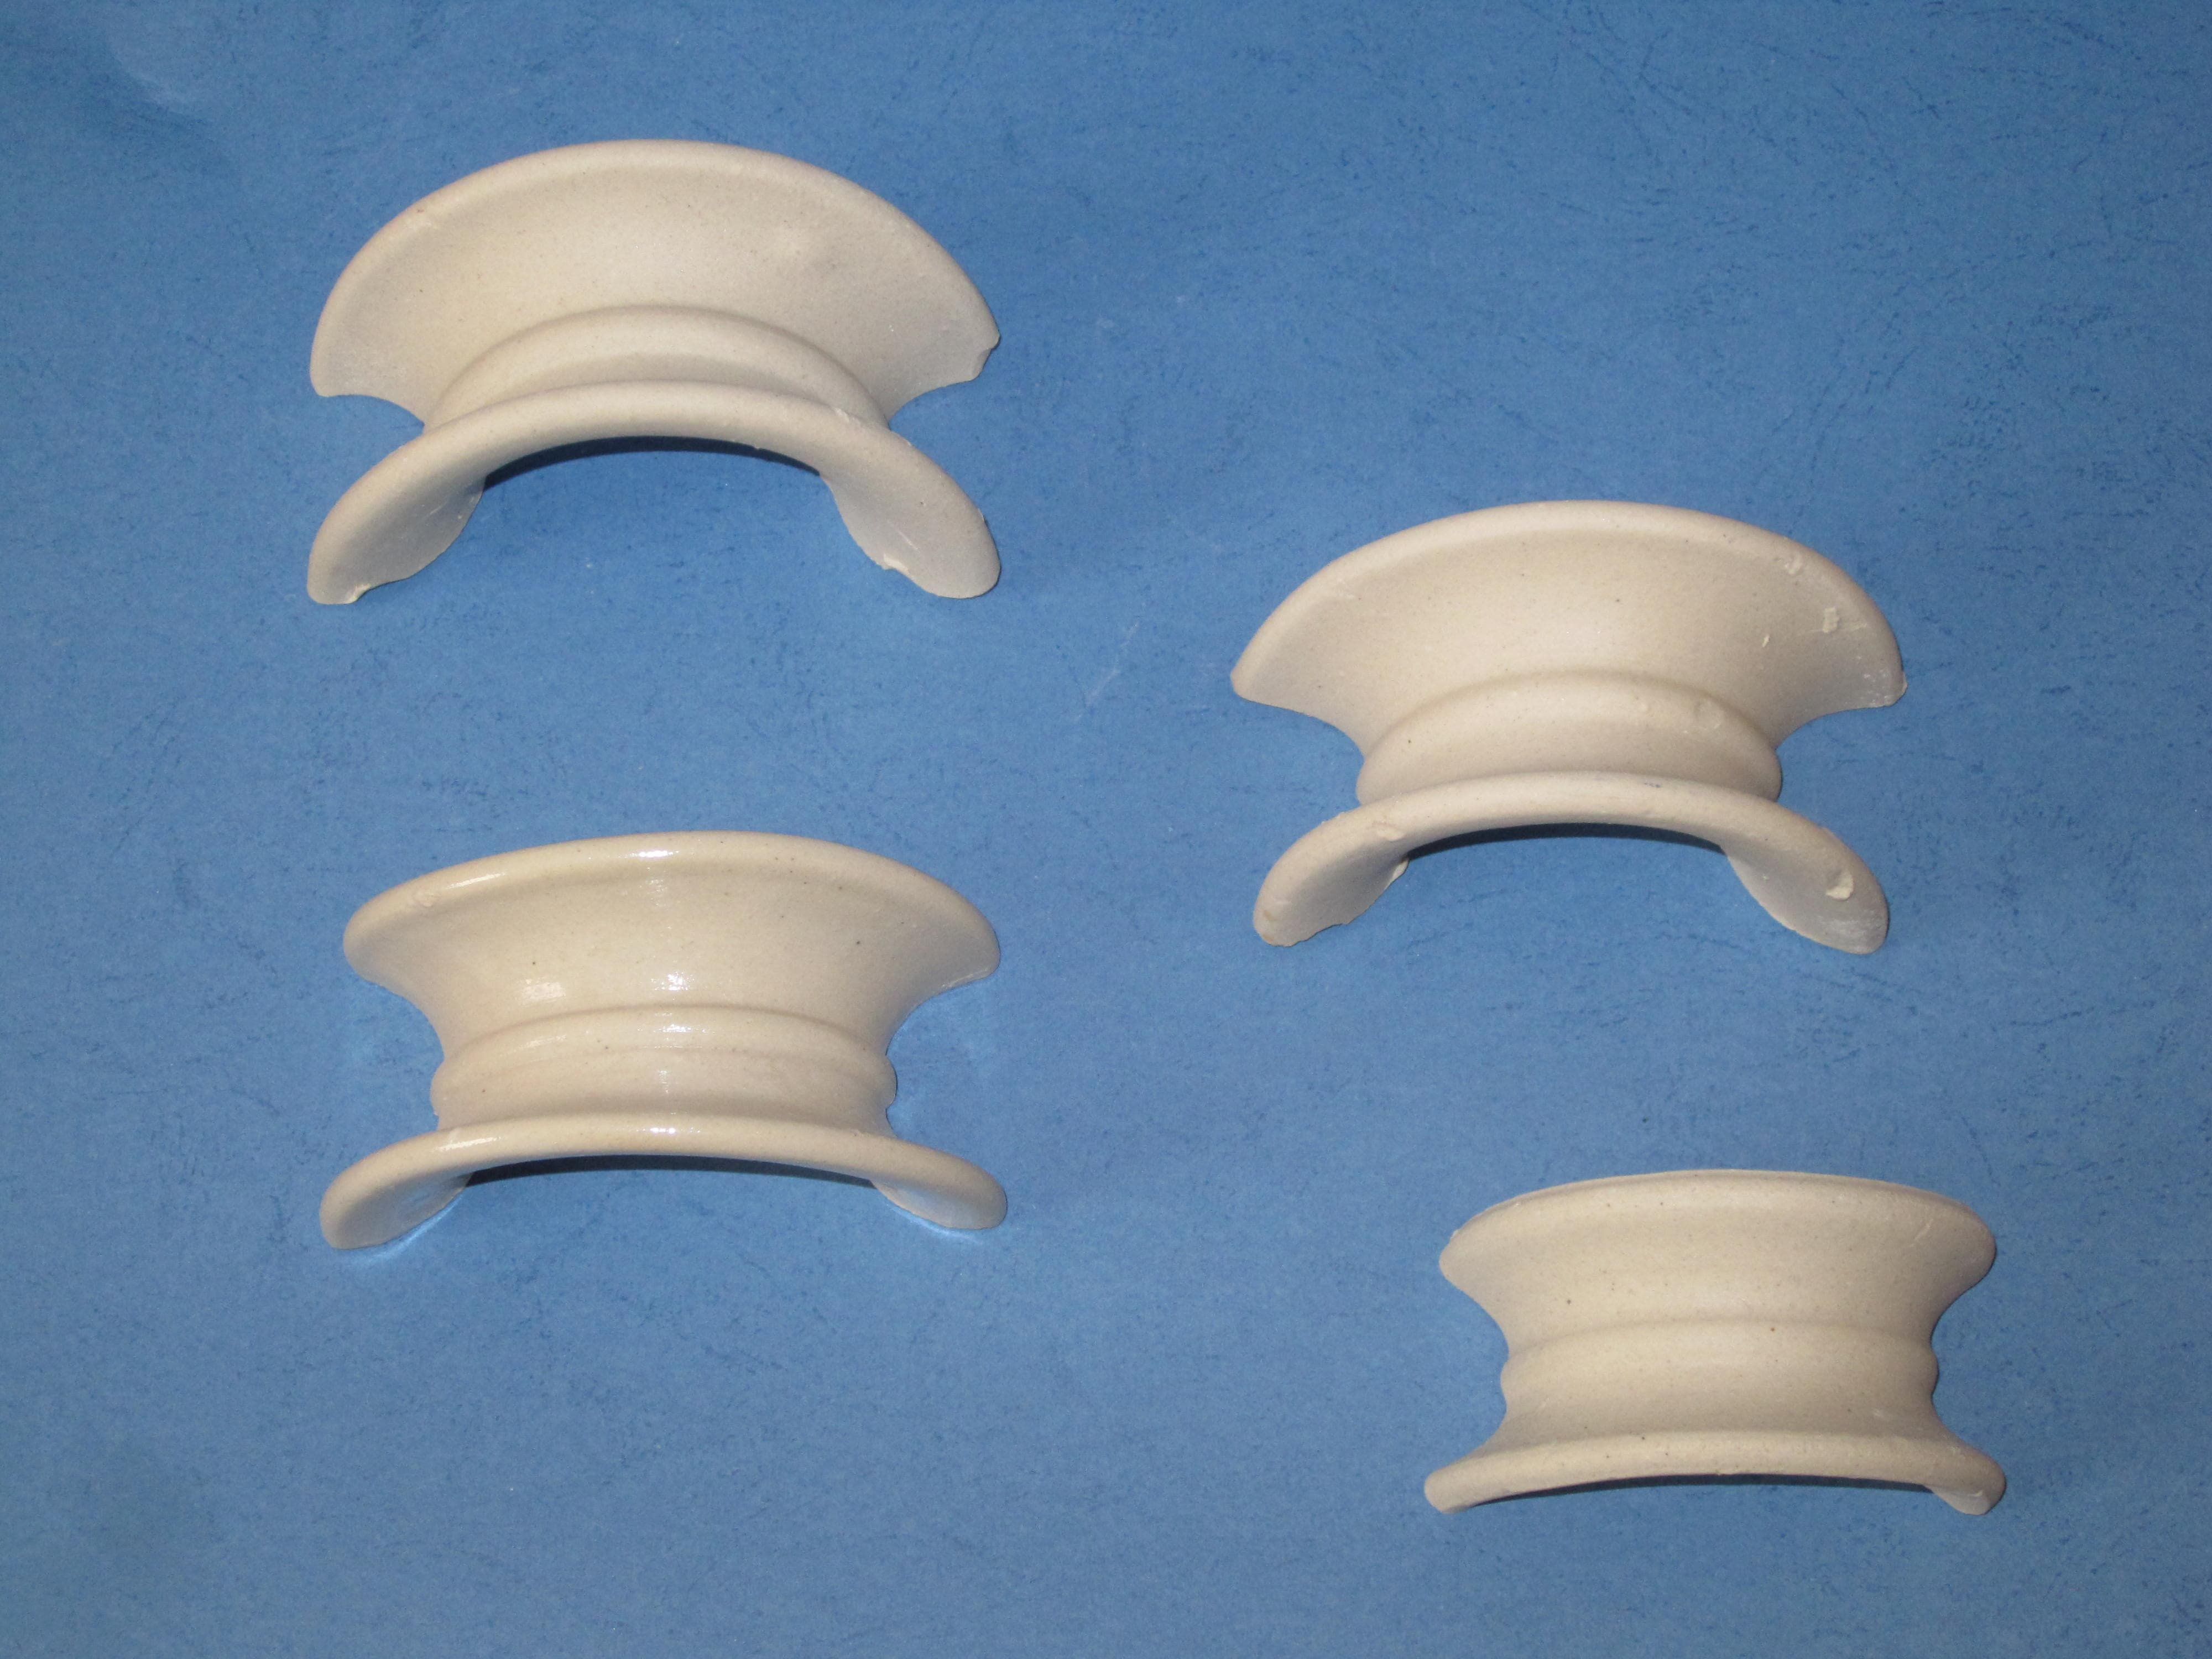 Ceramic intalox saddle for rto equipment